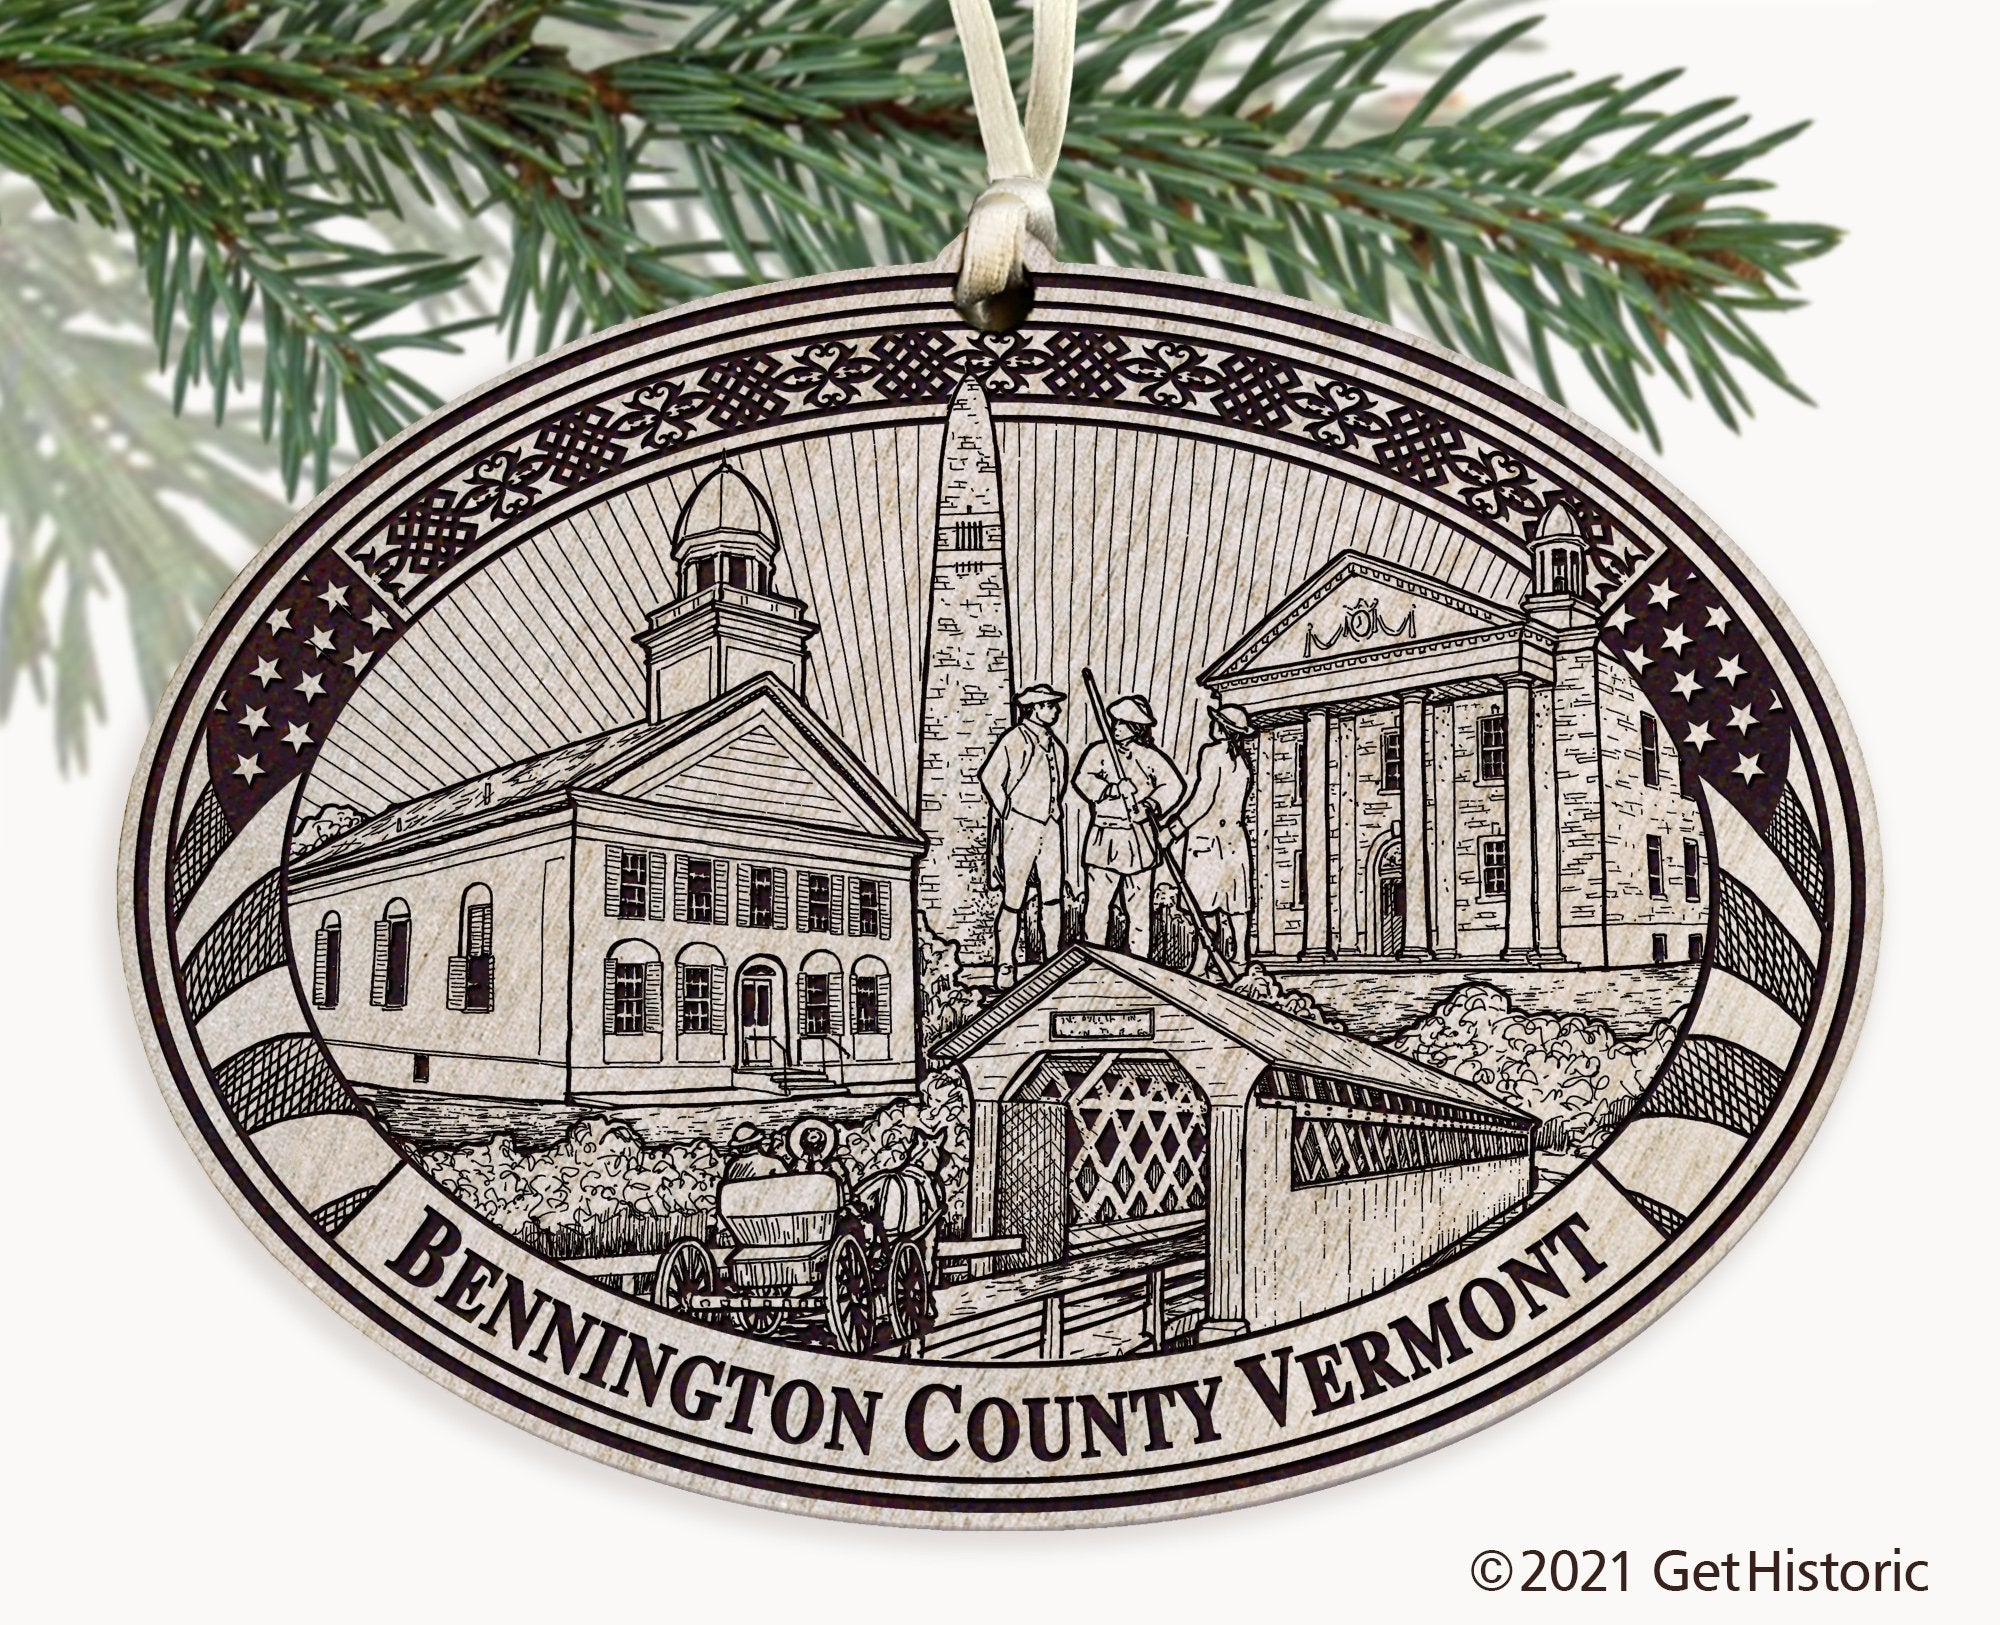 Bennington County Vermont Engraved Ornament